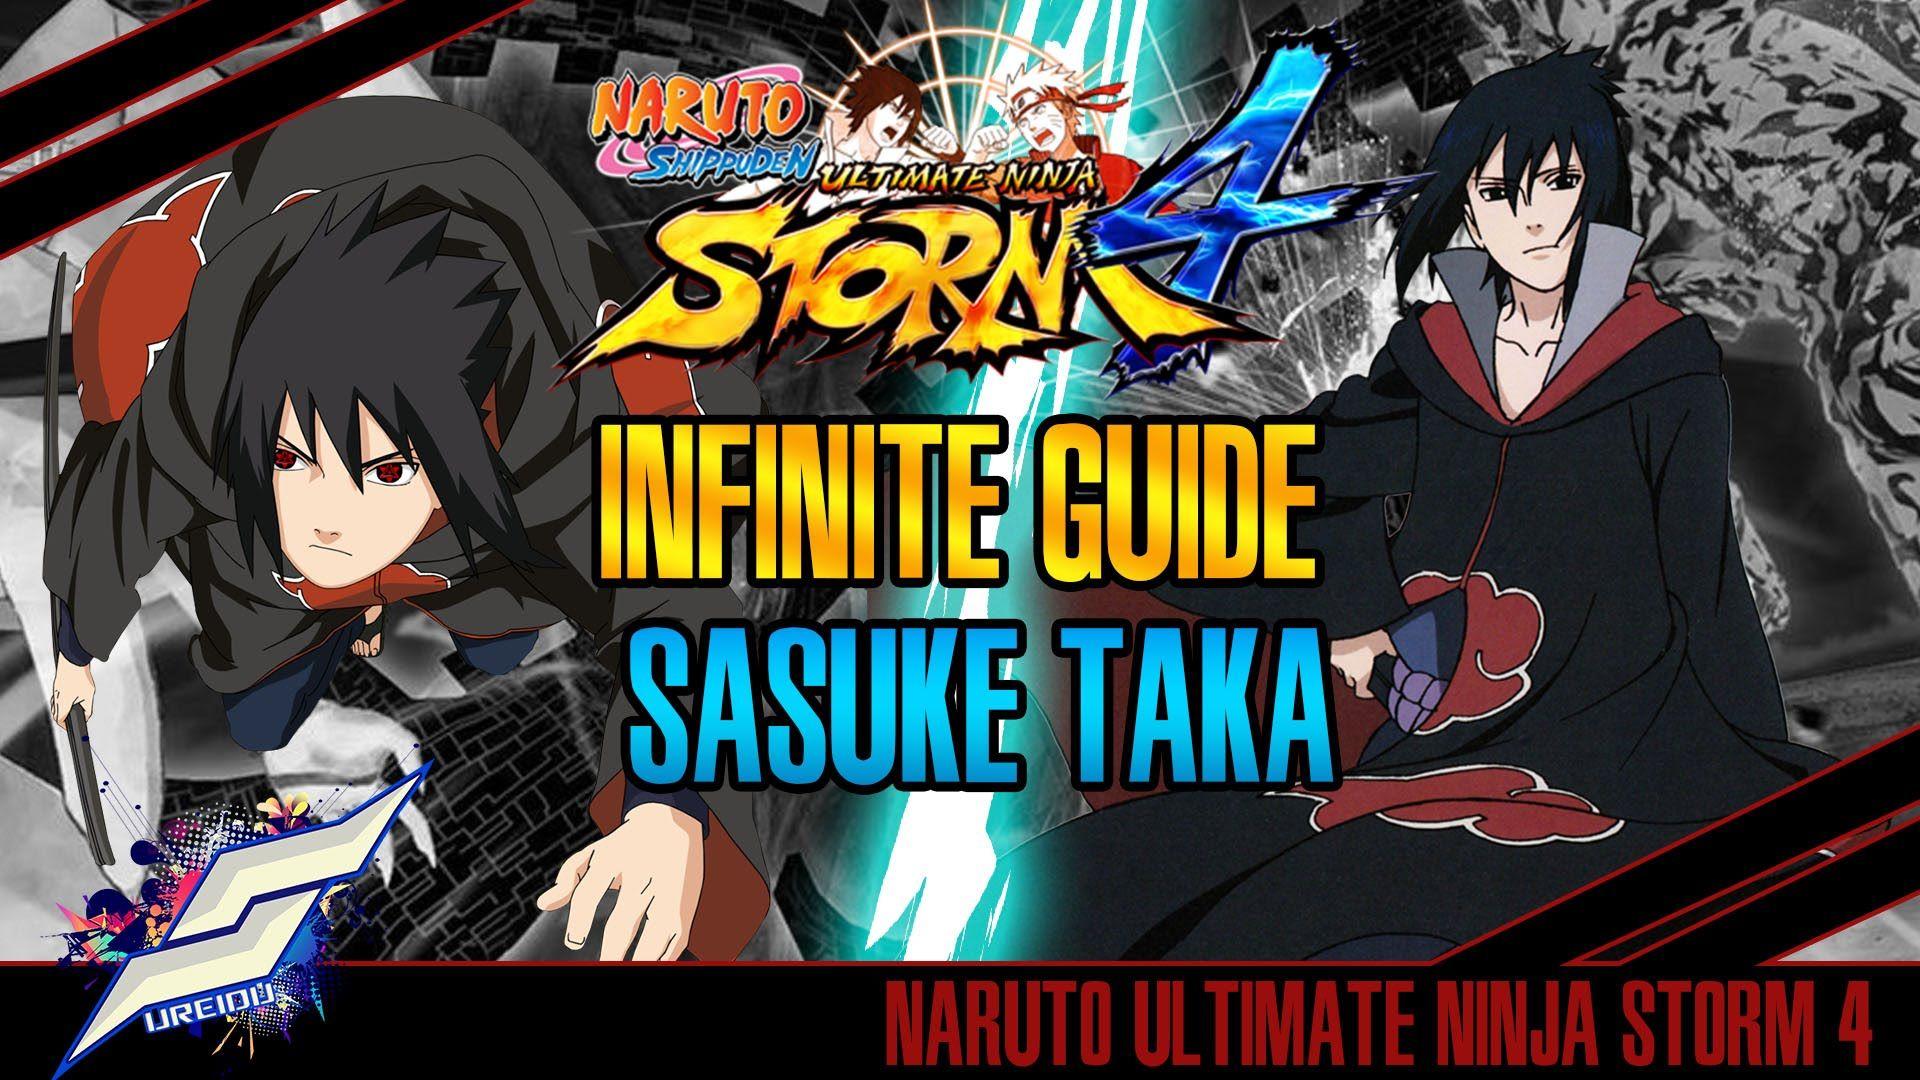 Naruto: Ultimate Ninja Storm 4. SASUKE TAKA INFINITE GUIDE!